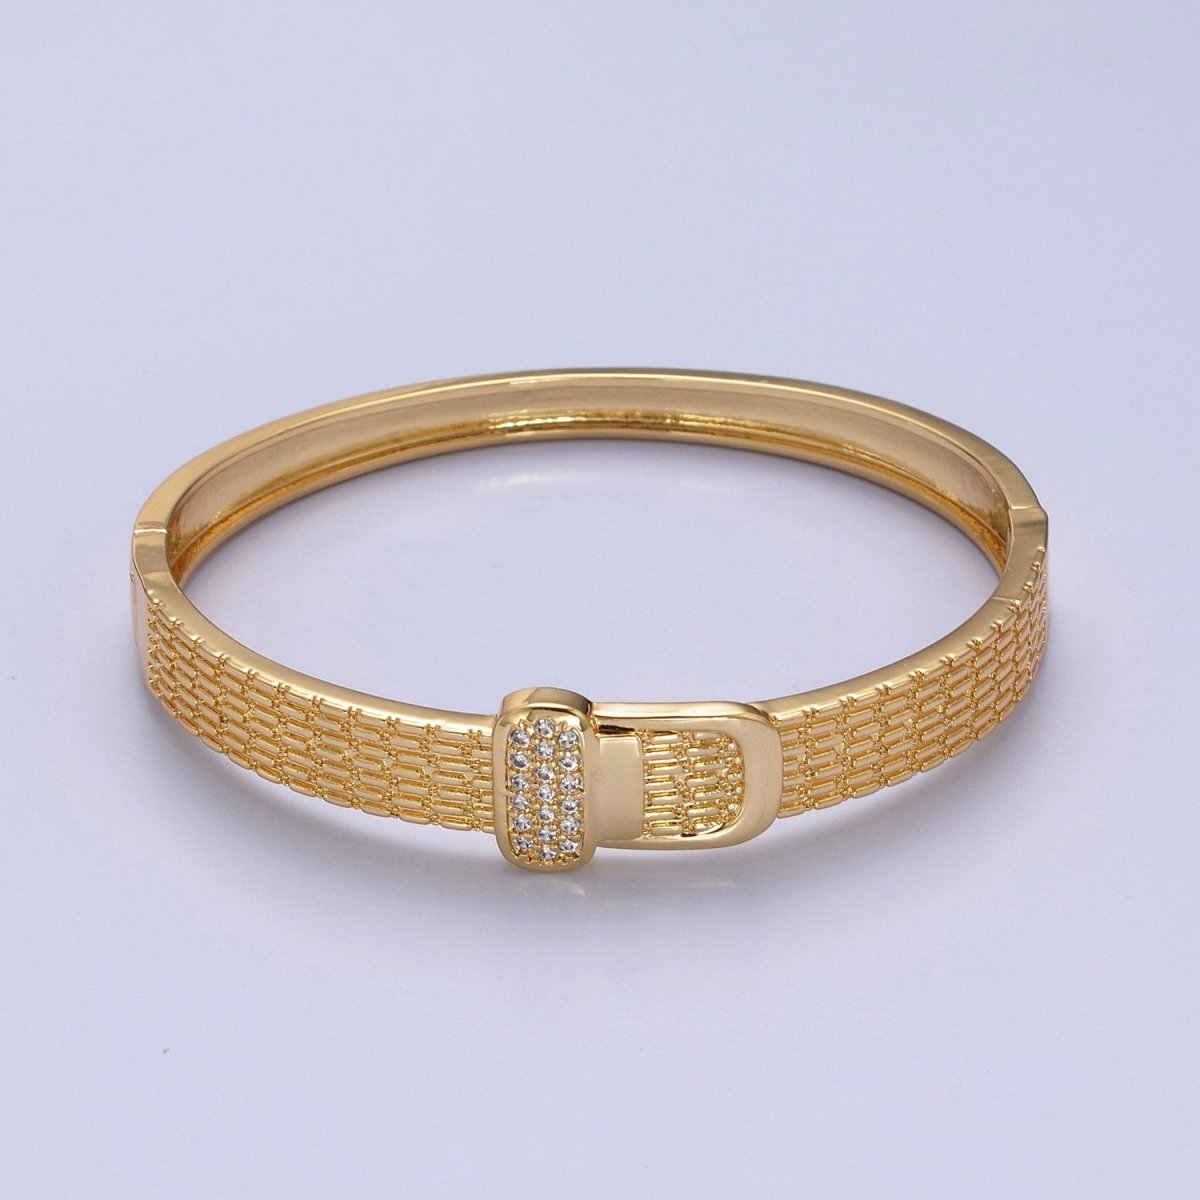 Belt Buckle Bracelet, Gold Bangle Bracelet, Minimalist Gold Bracelet, Stacking Silver Bangle Bracelet Jewelry | WA-951 WA-952 Clearance Pricing - DLUXCA